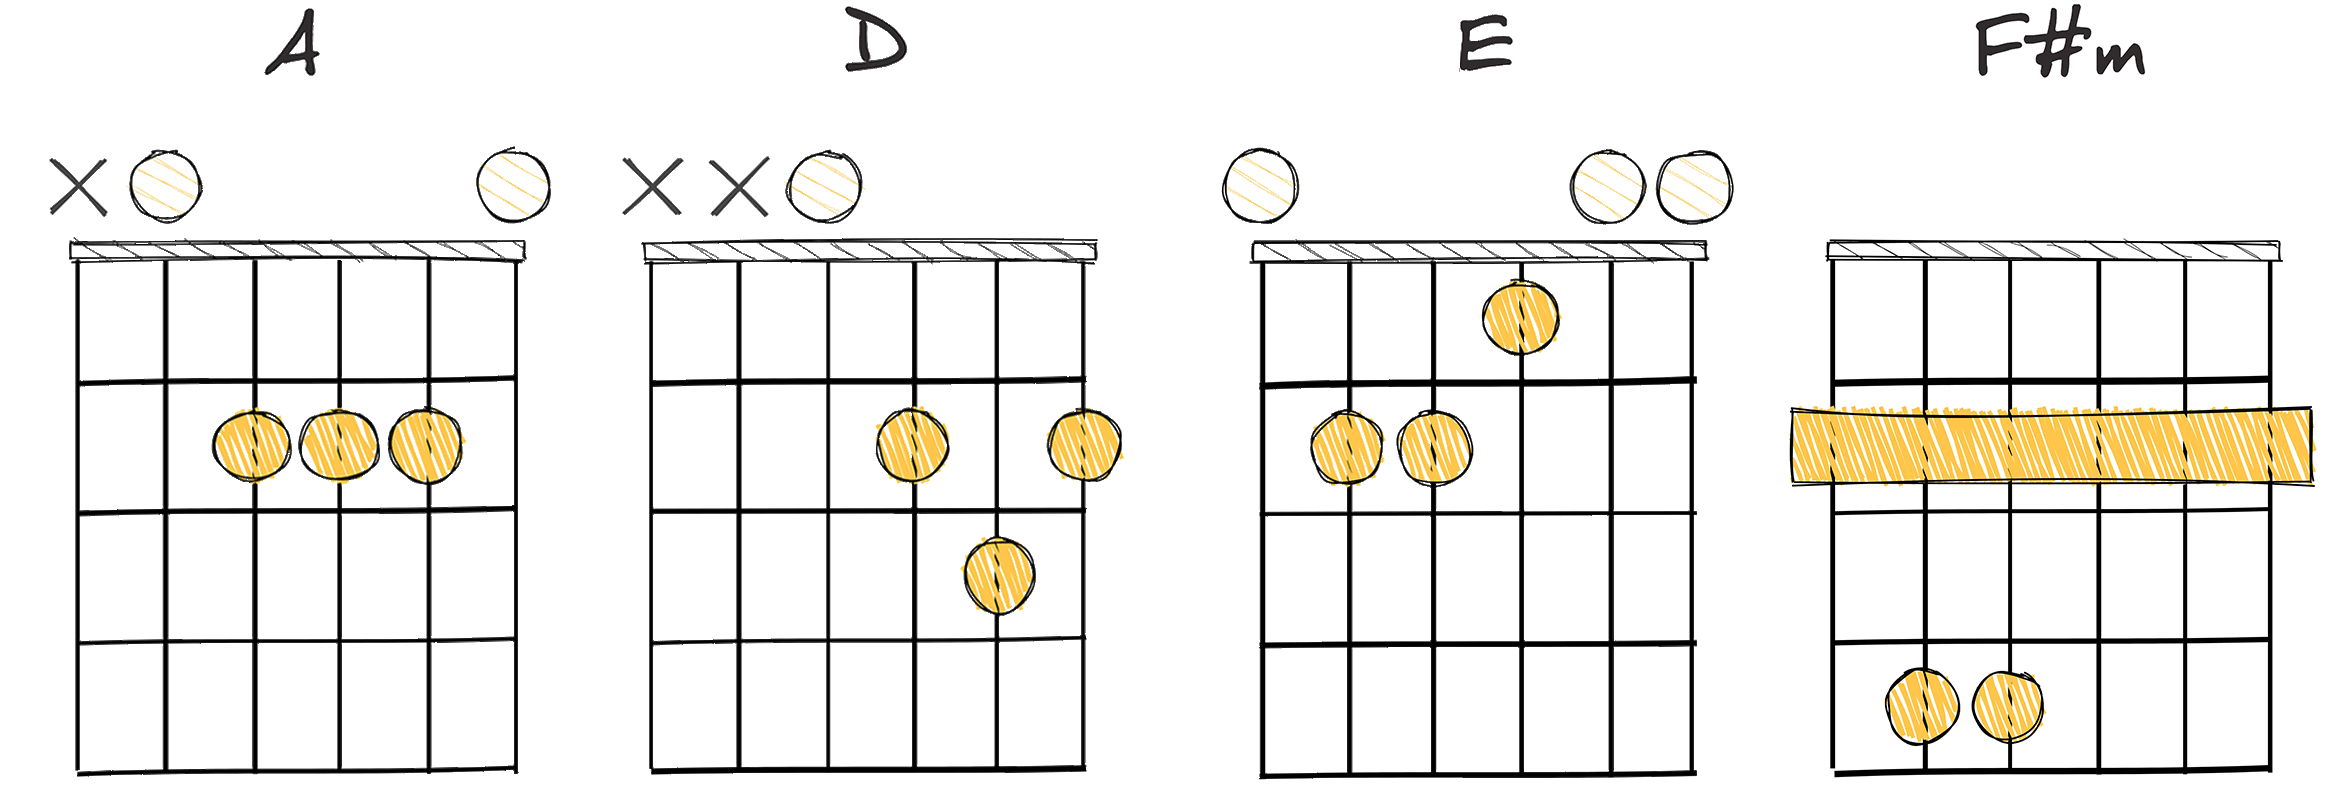 IV-I-V-vi (4-1-5-6) chords diagram